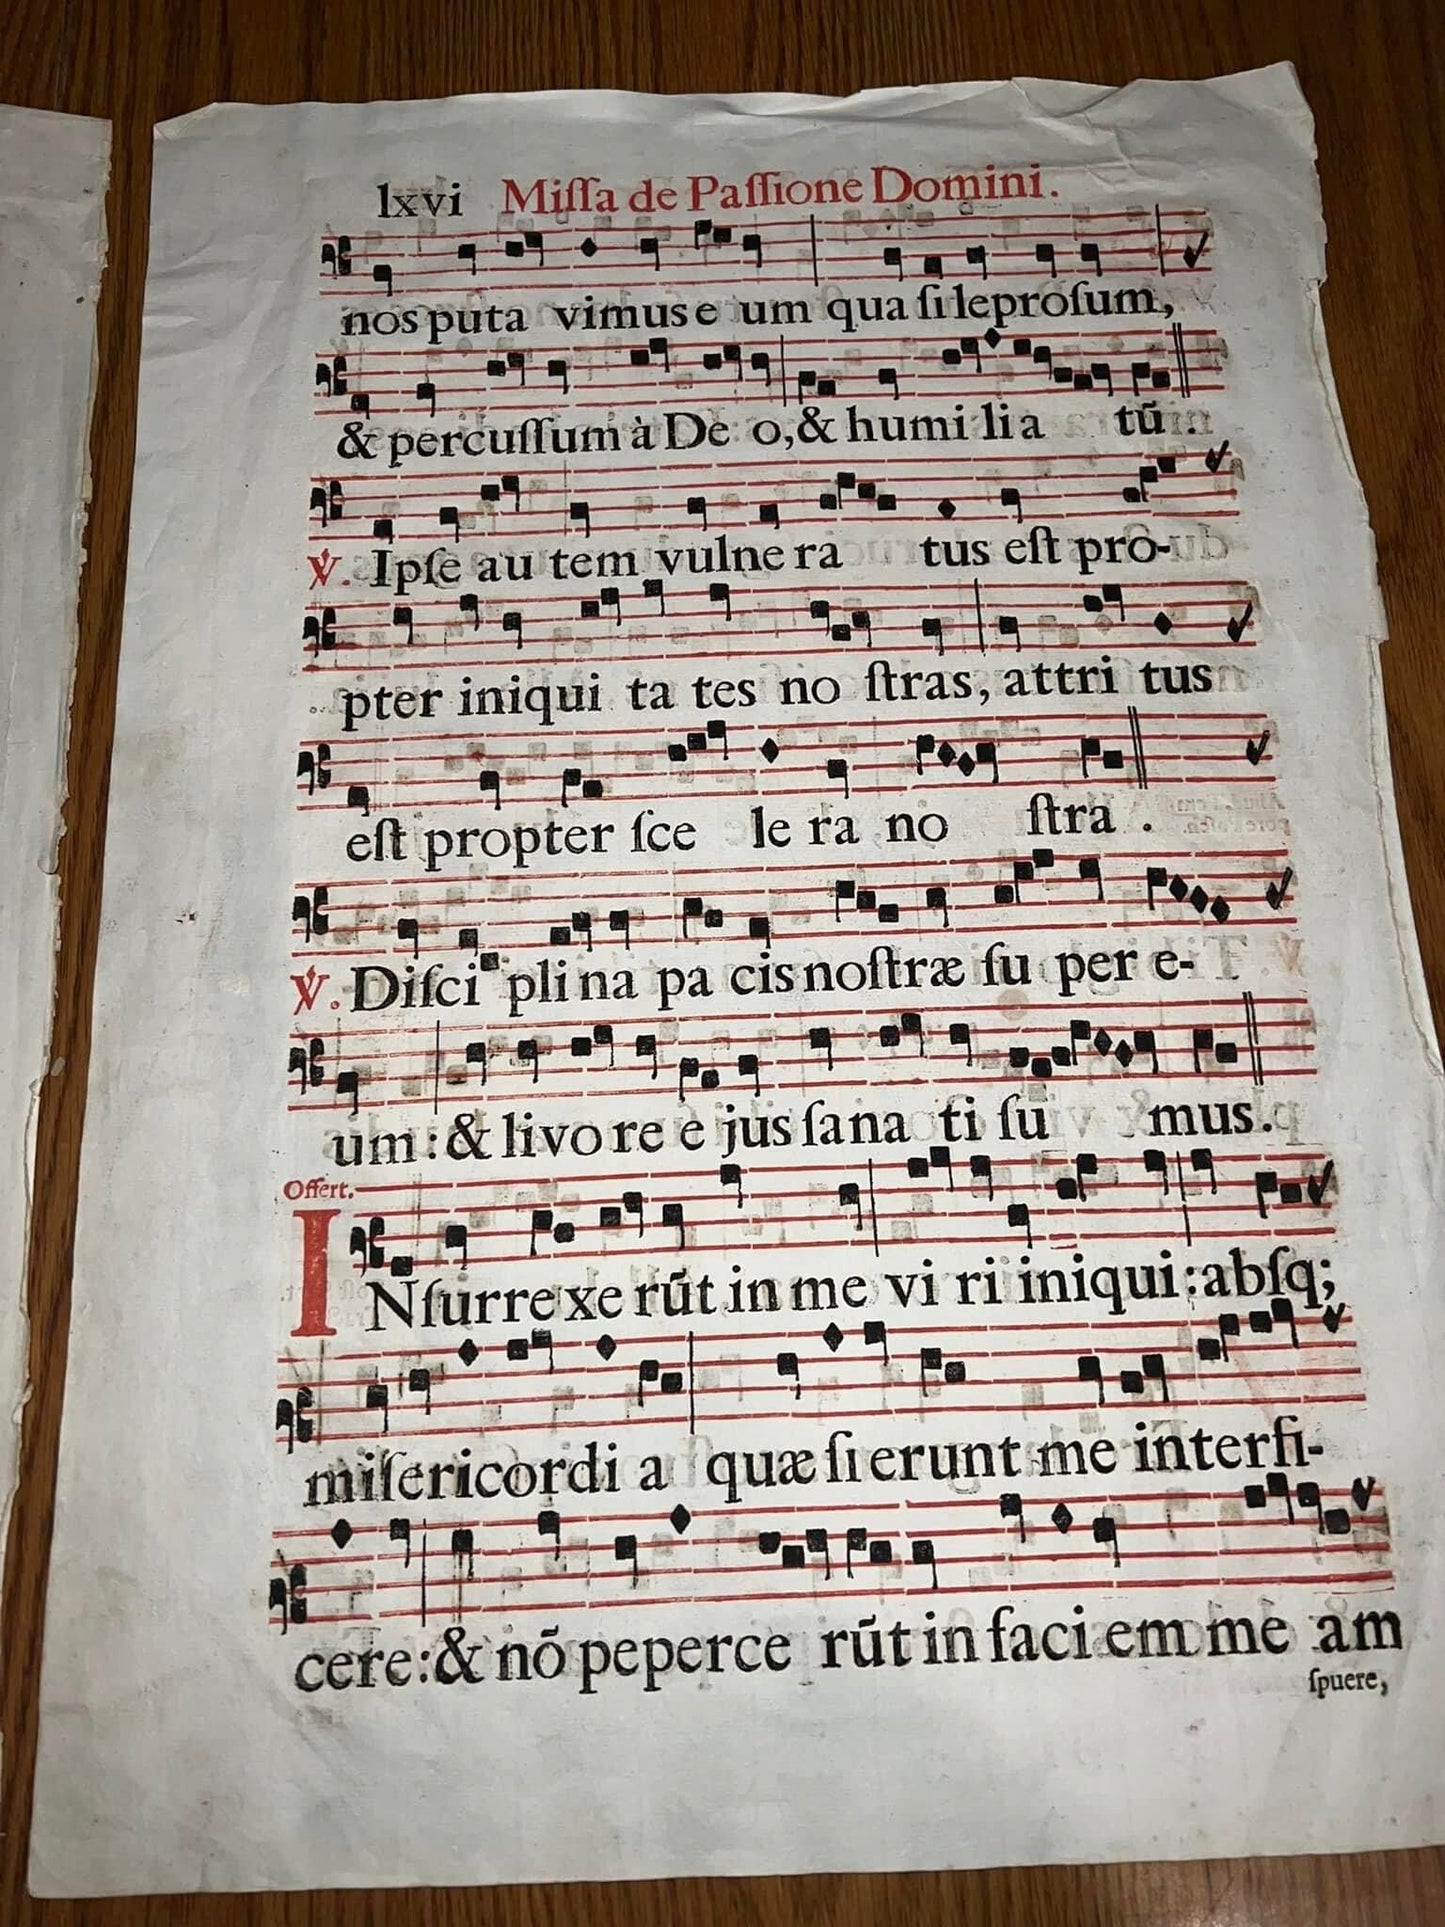 18th century antiphonal sheet music Religious in nature 1700s folio size